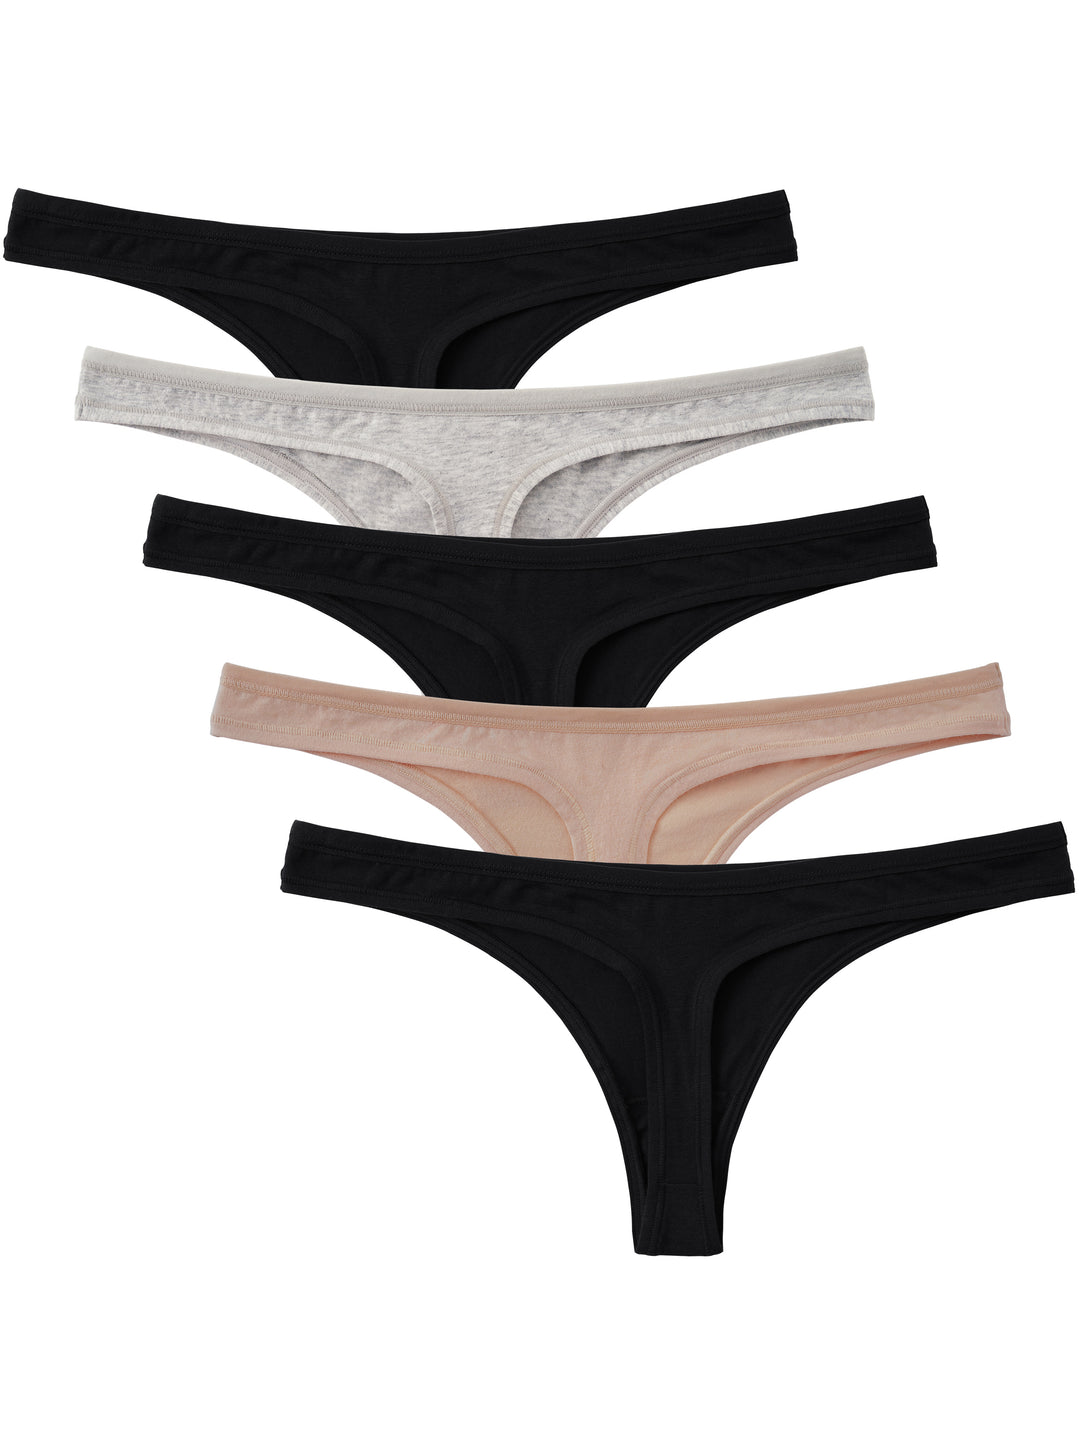 KNITLORD Women's Plus Size Underwear Cotton 6 Pack High Waisted Briefs  Panties, Black 6pk, 5XL Plus price in UAE,  UAE